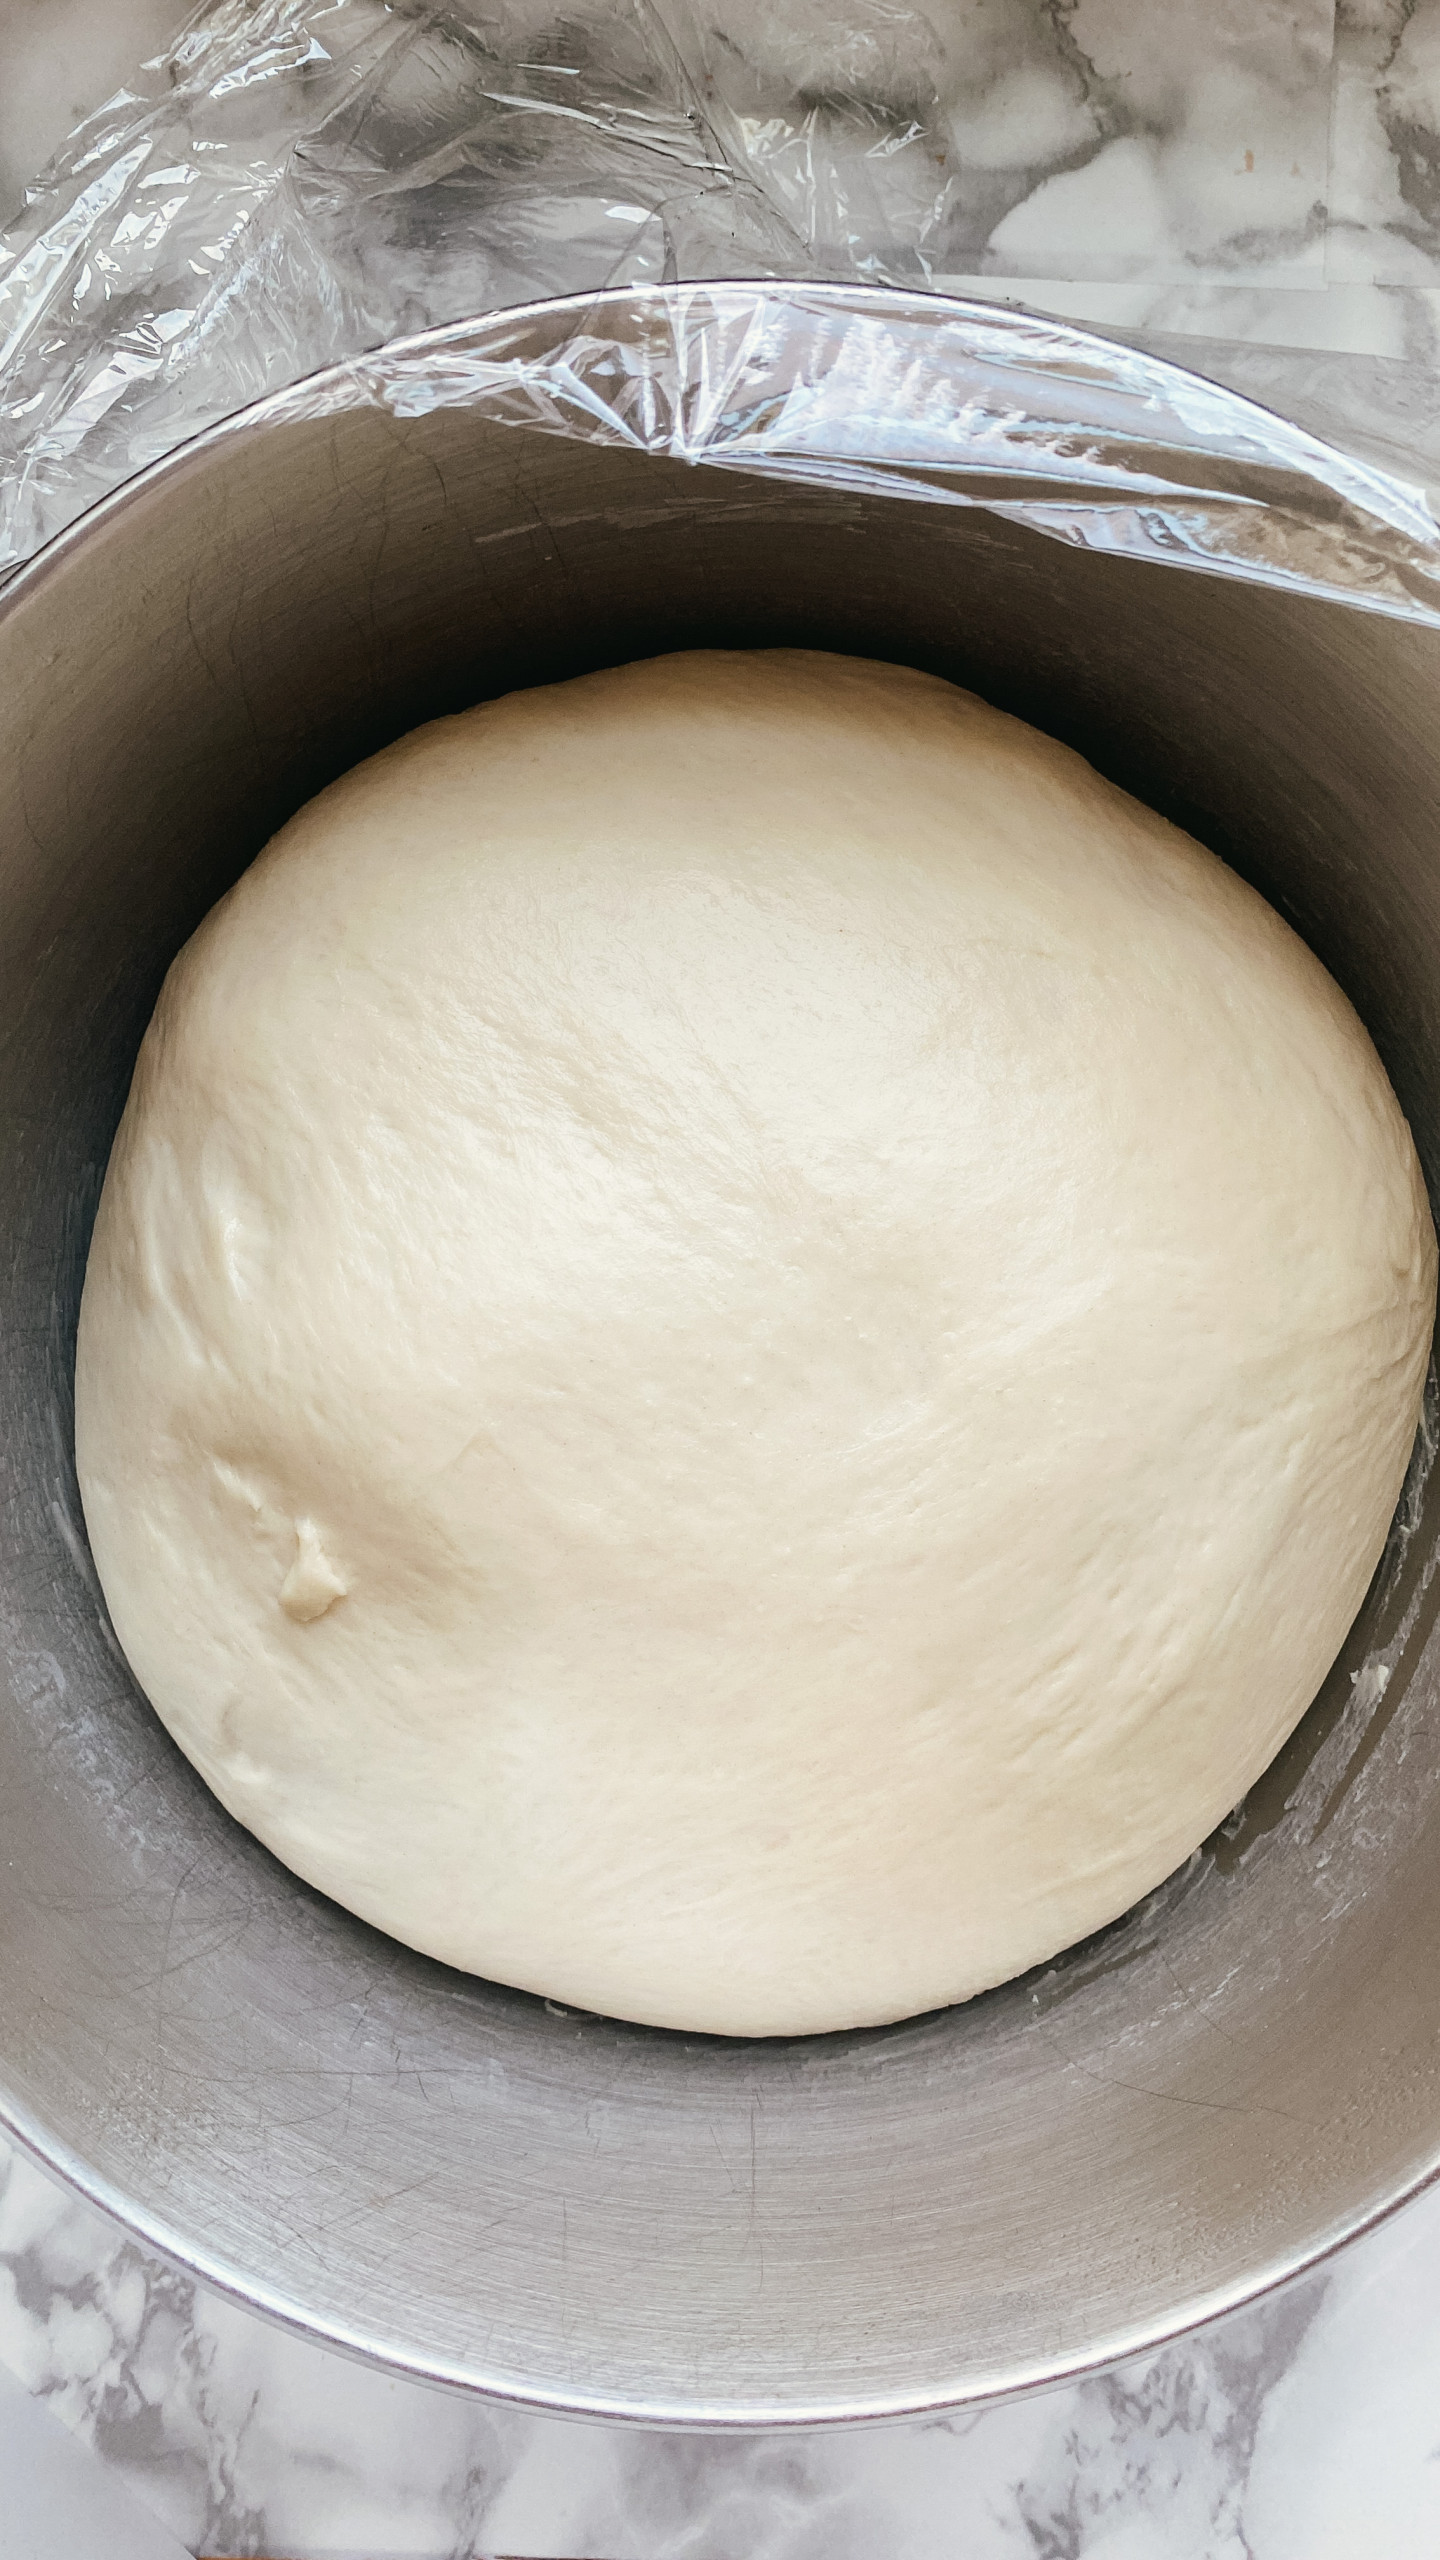 A ball of risen dough in a bowl.